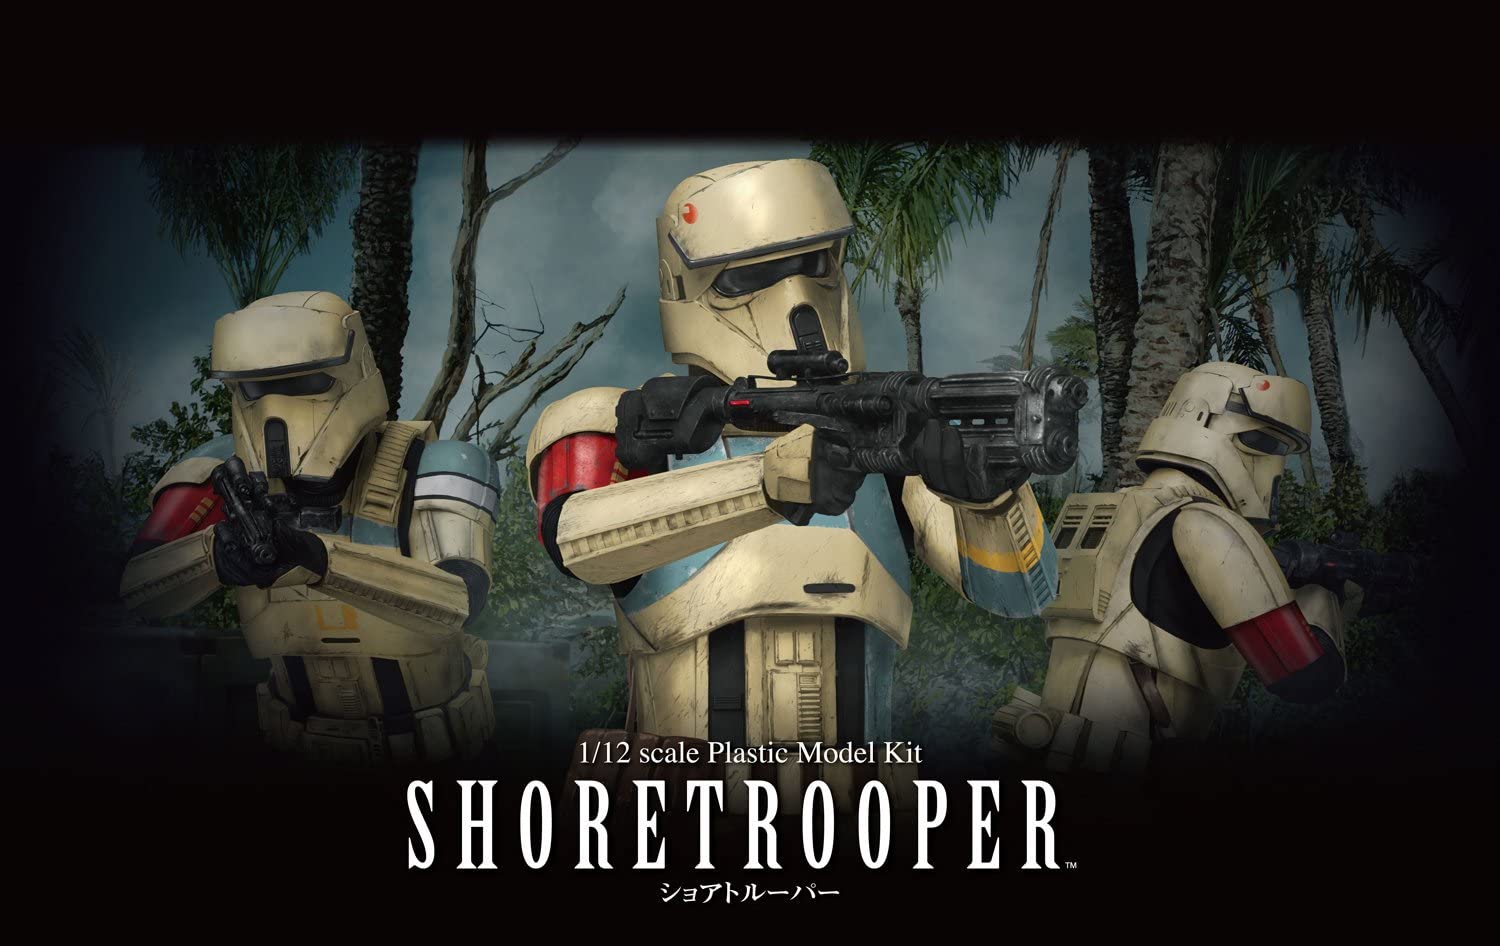 Bandai Shoretrooper "Star Wars", Bandai Star Wars Character Line 1/12 | L.A. Mood Comics and Games